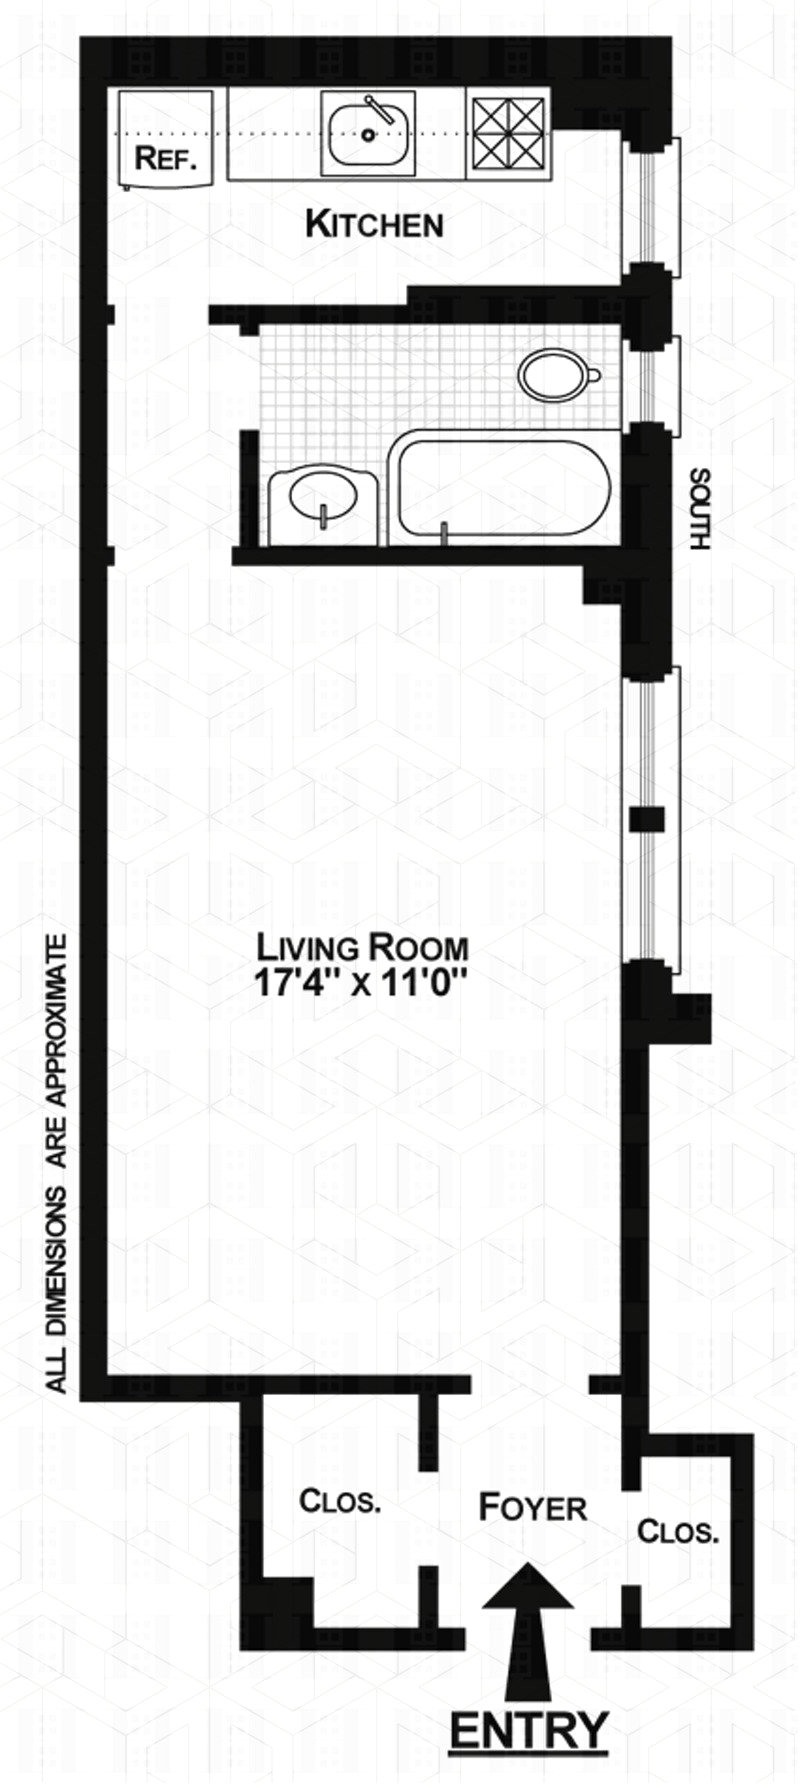 Floorplan for 321 East 54th Street